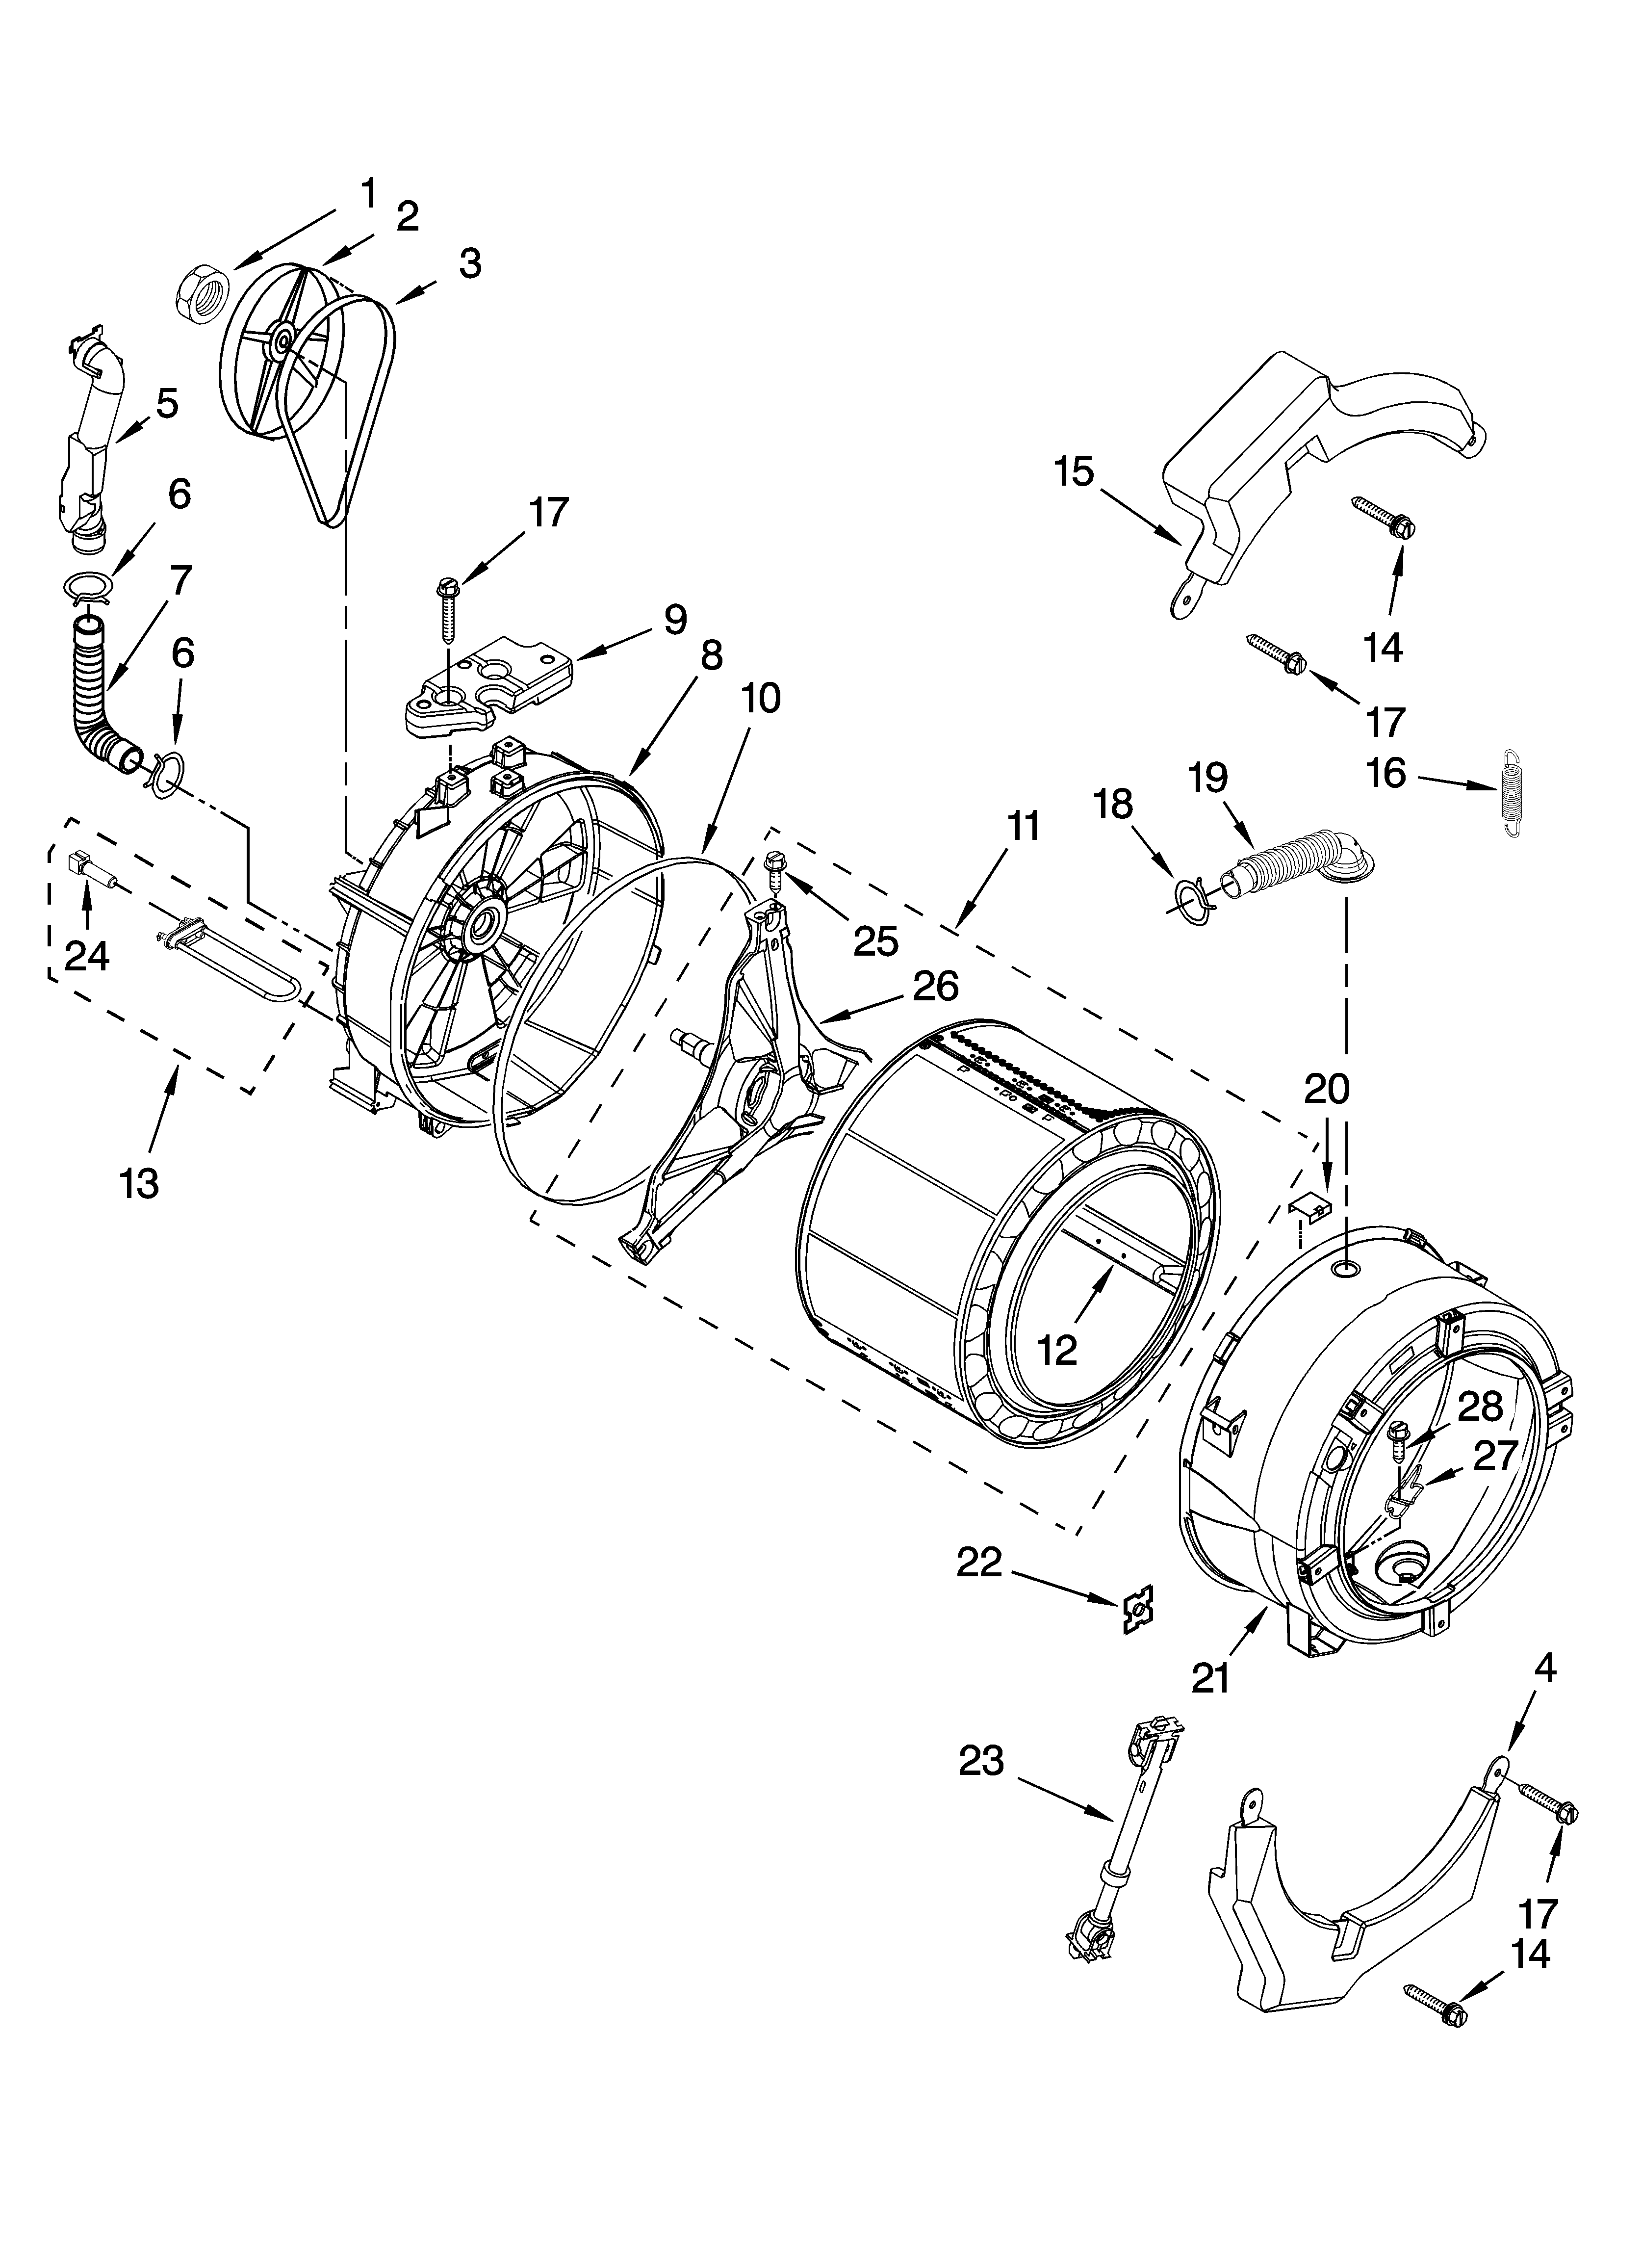 whirlpool duet dryer parts diagram